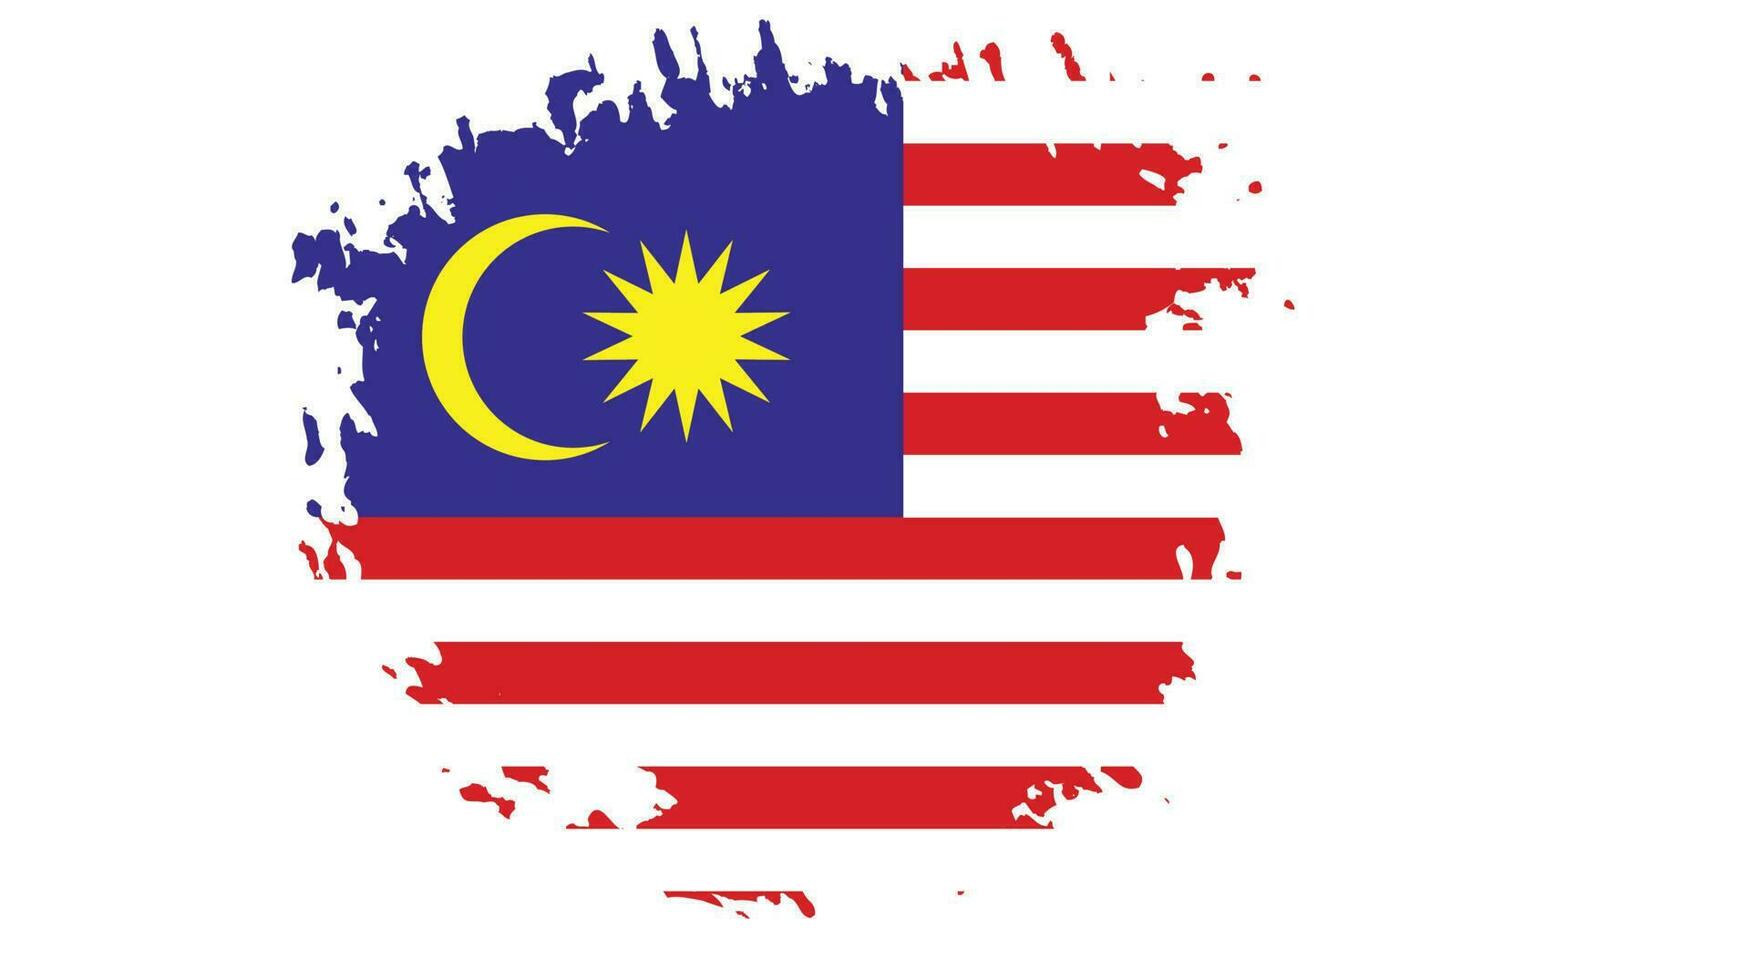 professionell malaysia grunge flagga vektor